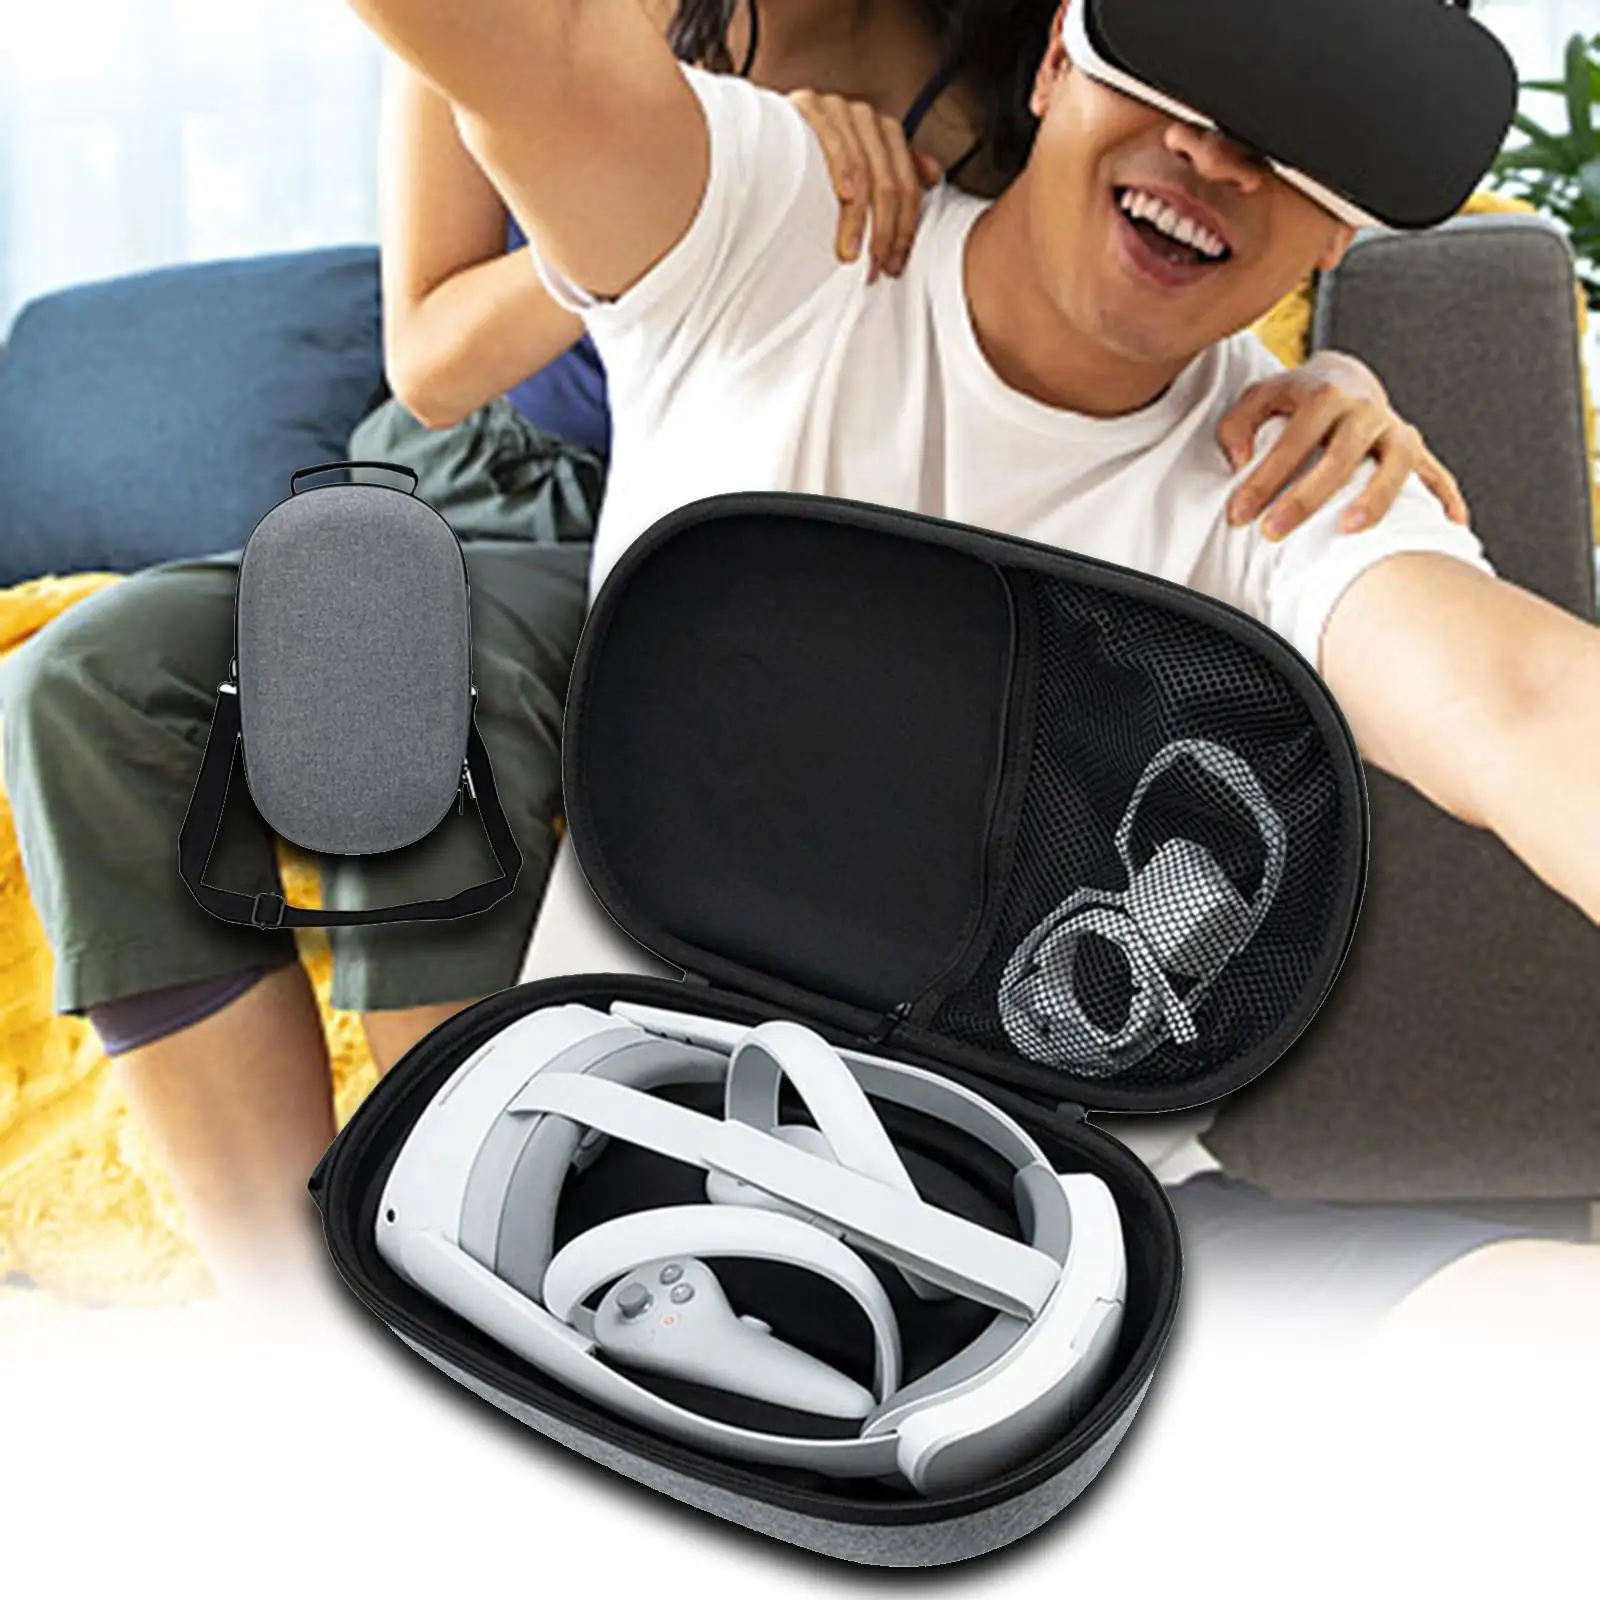 VR Headset Case Protective Pouch Protection Bag Multifunction Dustproof EVA Storage Bag for Quest 2 Portable Case VR Glasses Bag